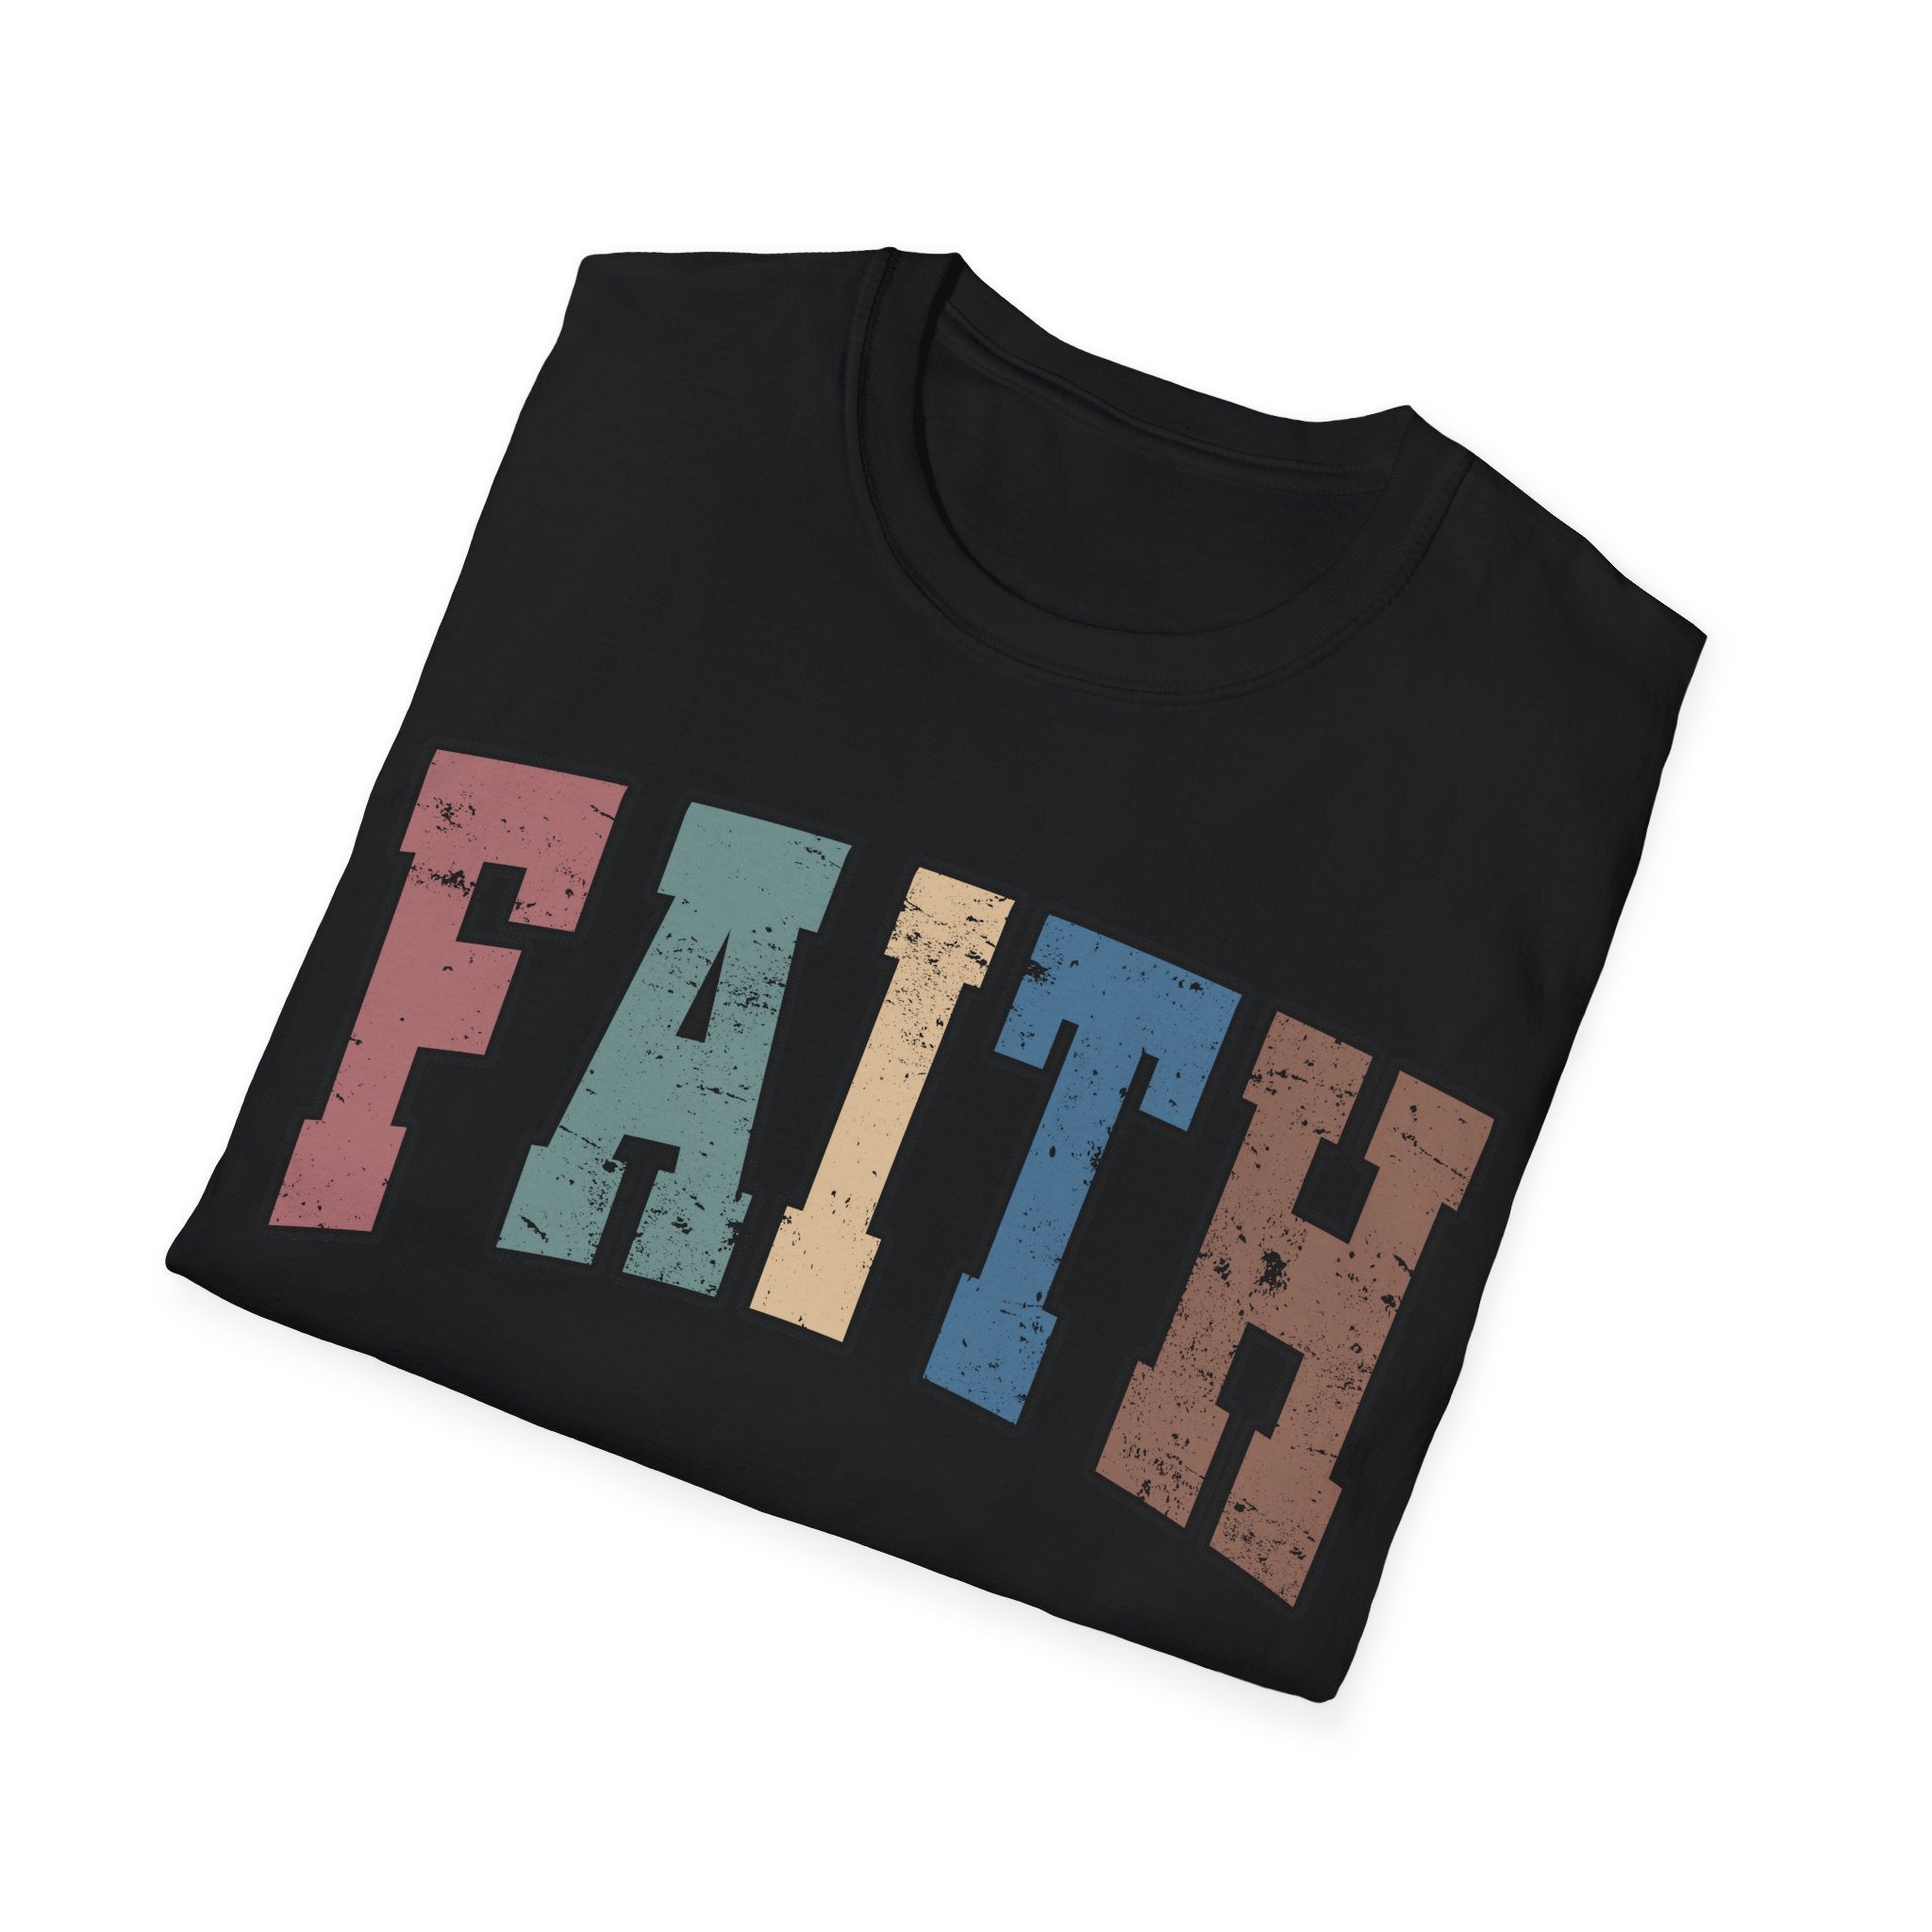 Faith Softstyle T-Shirt T-Shirt Krazy Heart Designs Boutique   